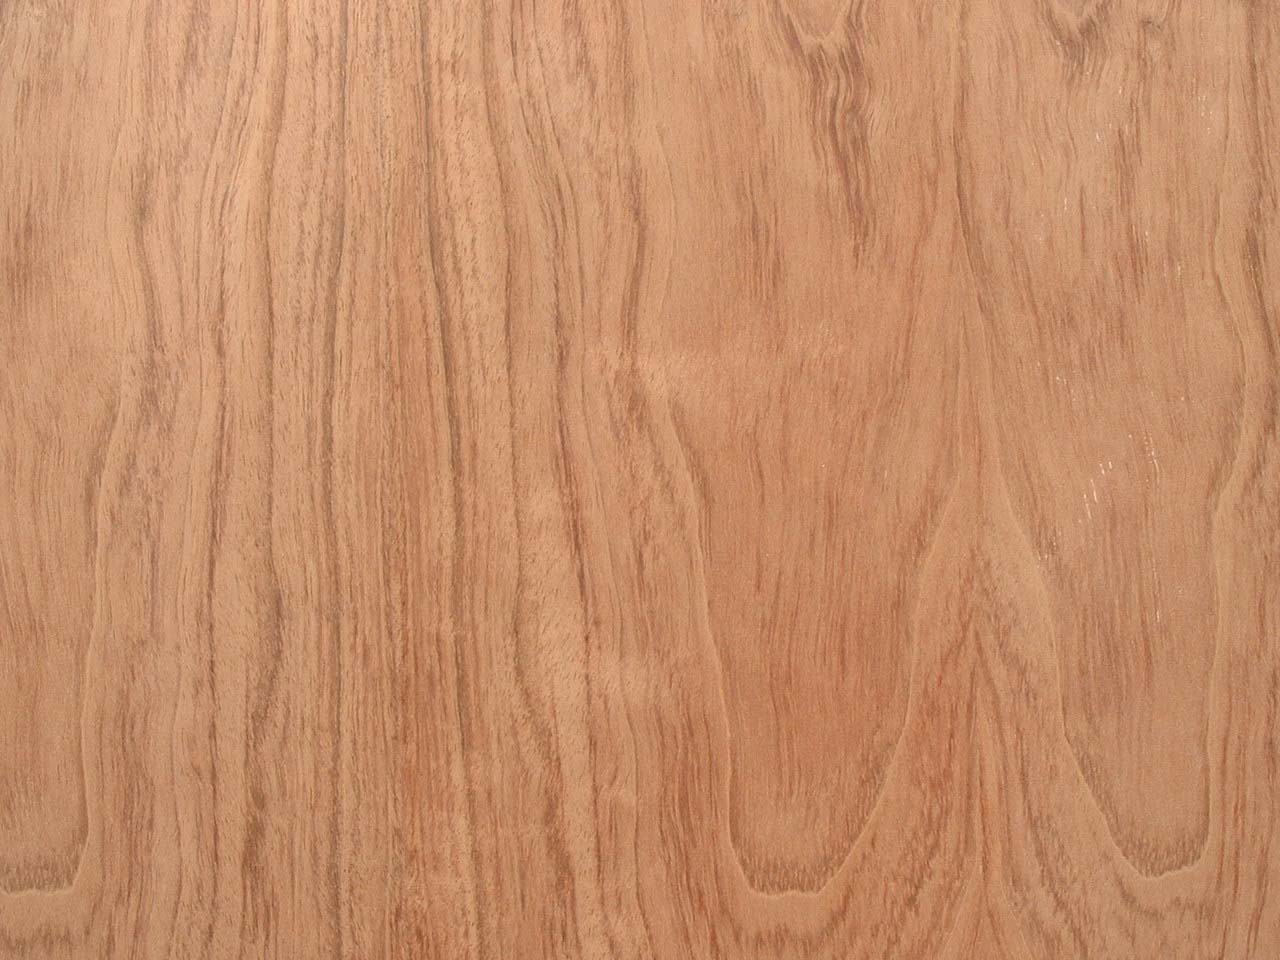 Mahogany Veneer Plain Sliced Wood on Wood Backer Backing 4' X 10' 48" x 120" 